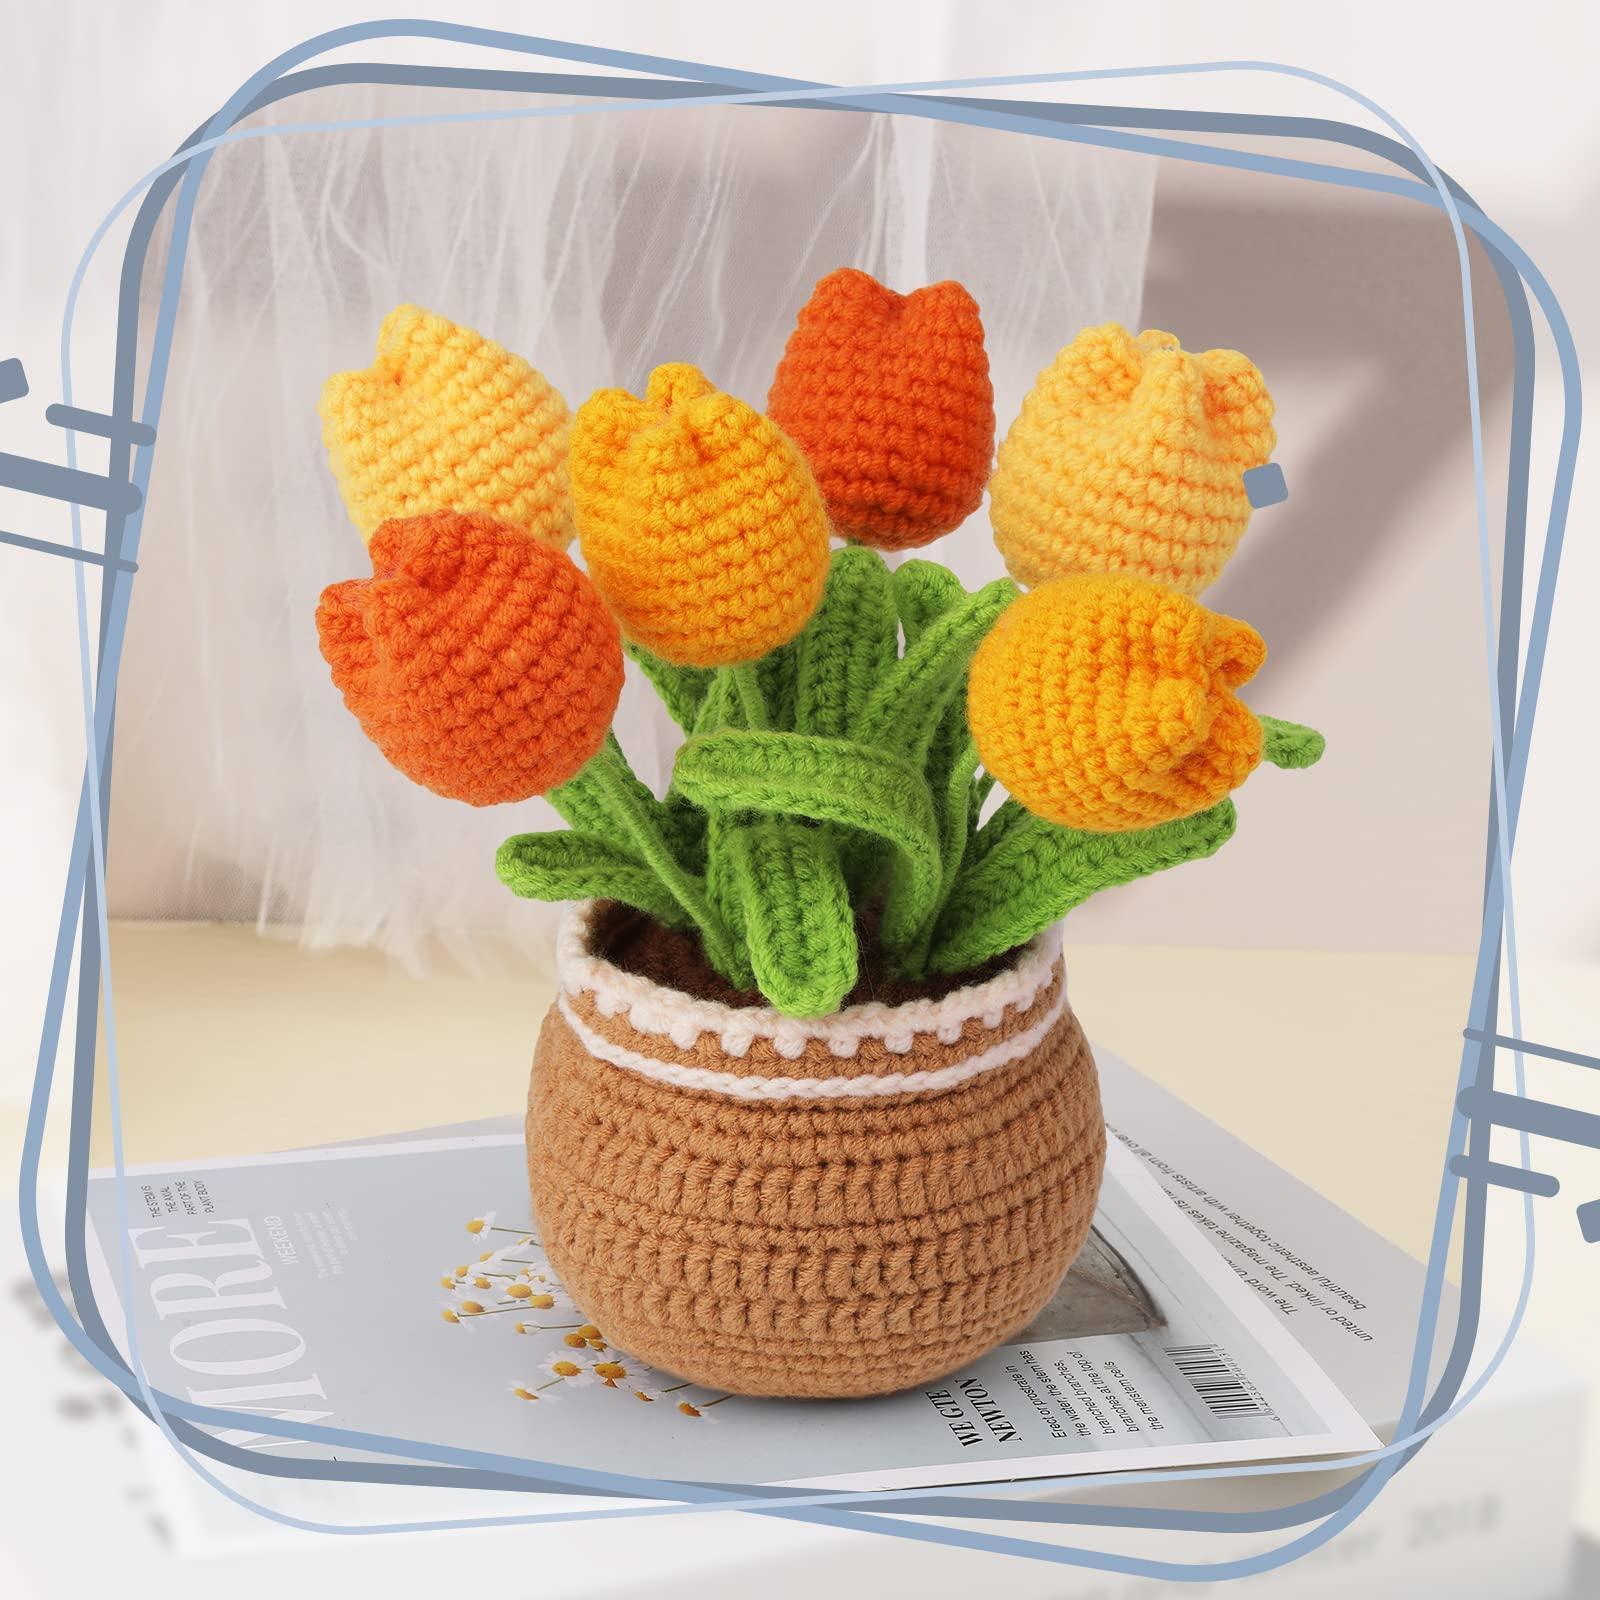 DIY Crochet Tulip Kit